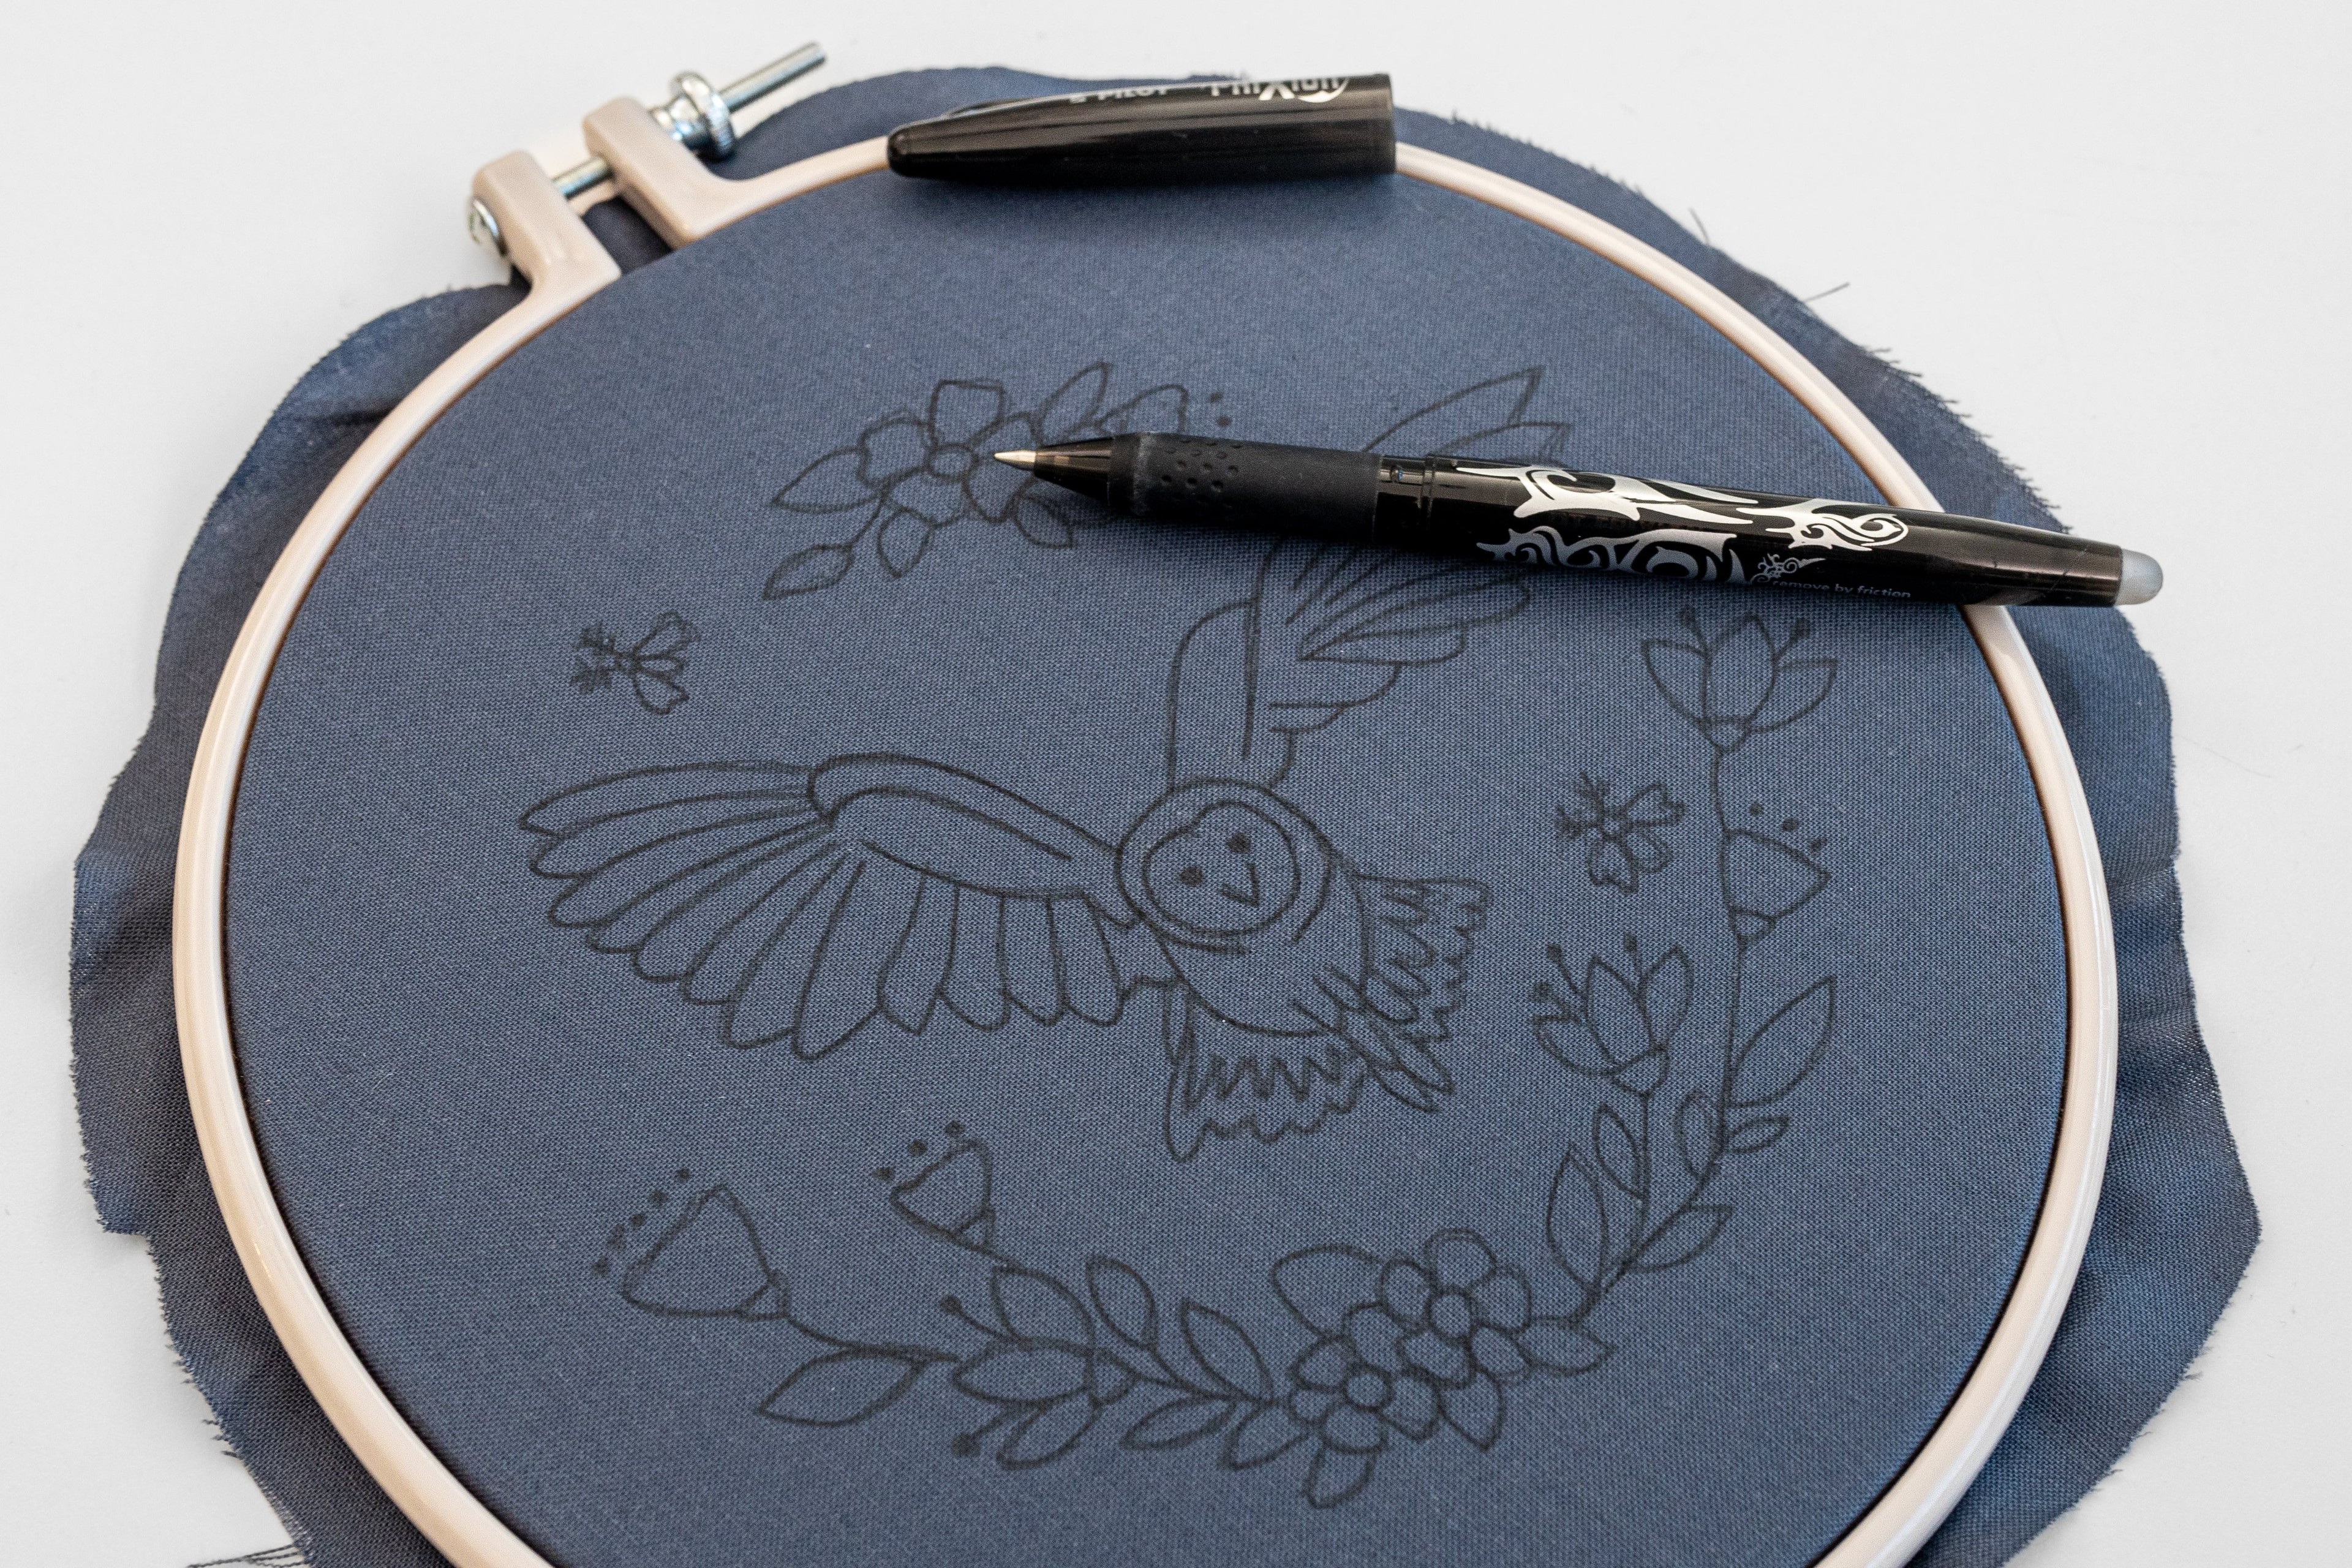 A transfer pen lies on The Night Owl pattern.